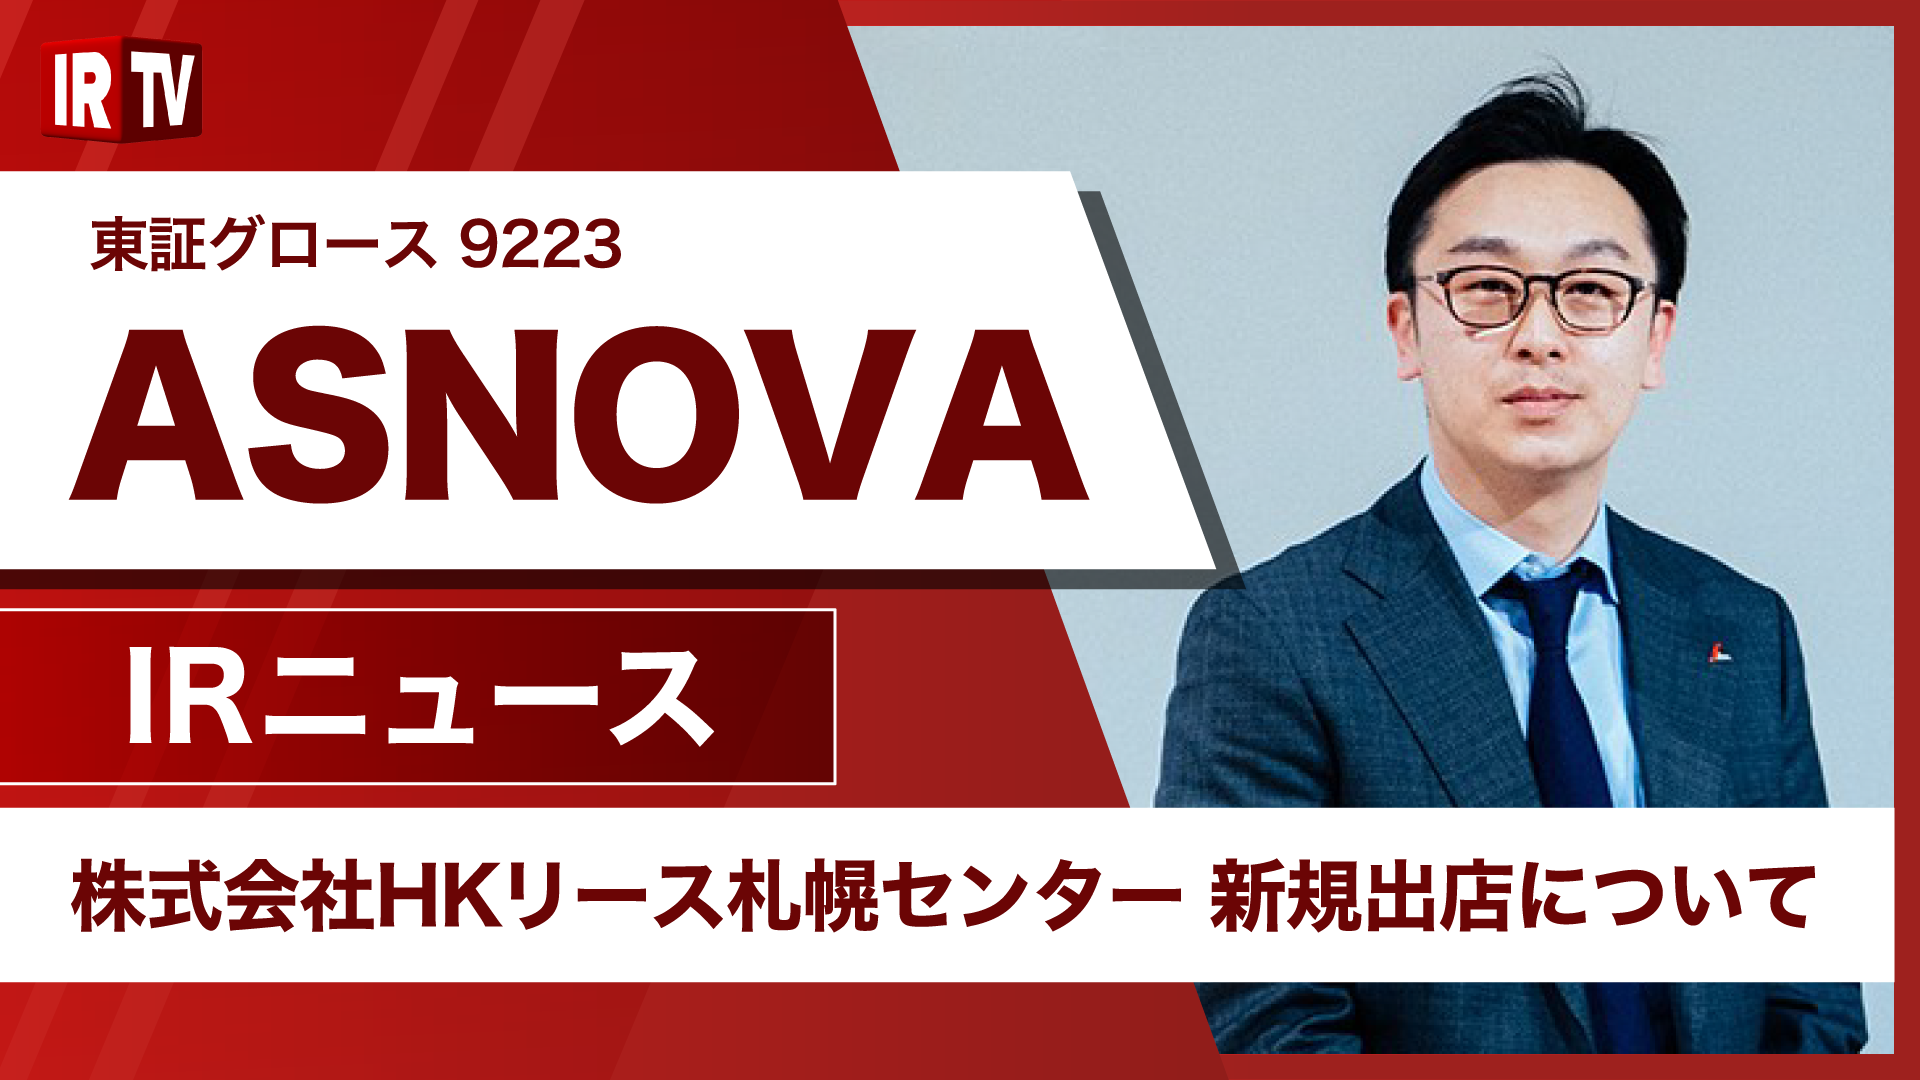 【IRTV 9223】ASNOVA/ASNOVA STATION 株式会社HKリース札幌センターを新規出店